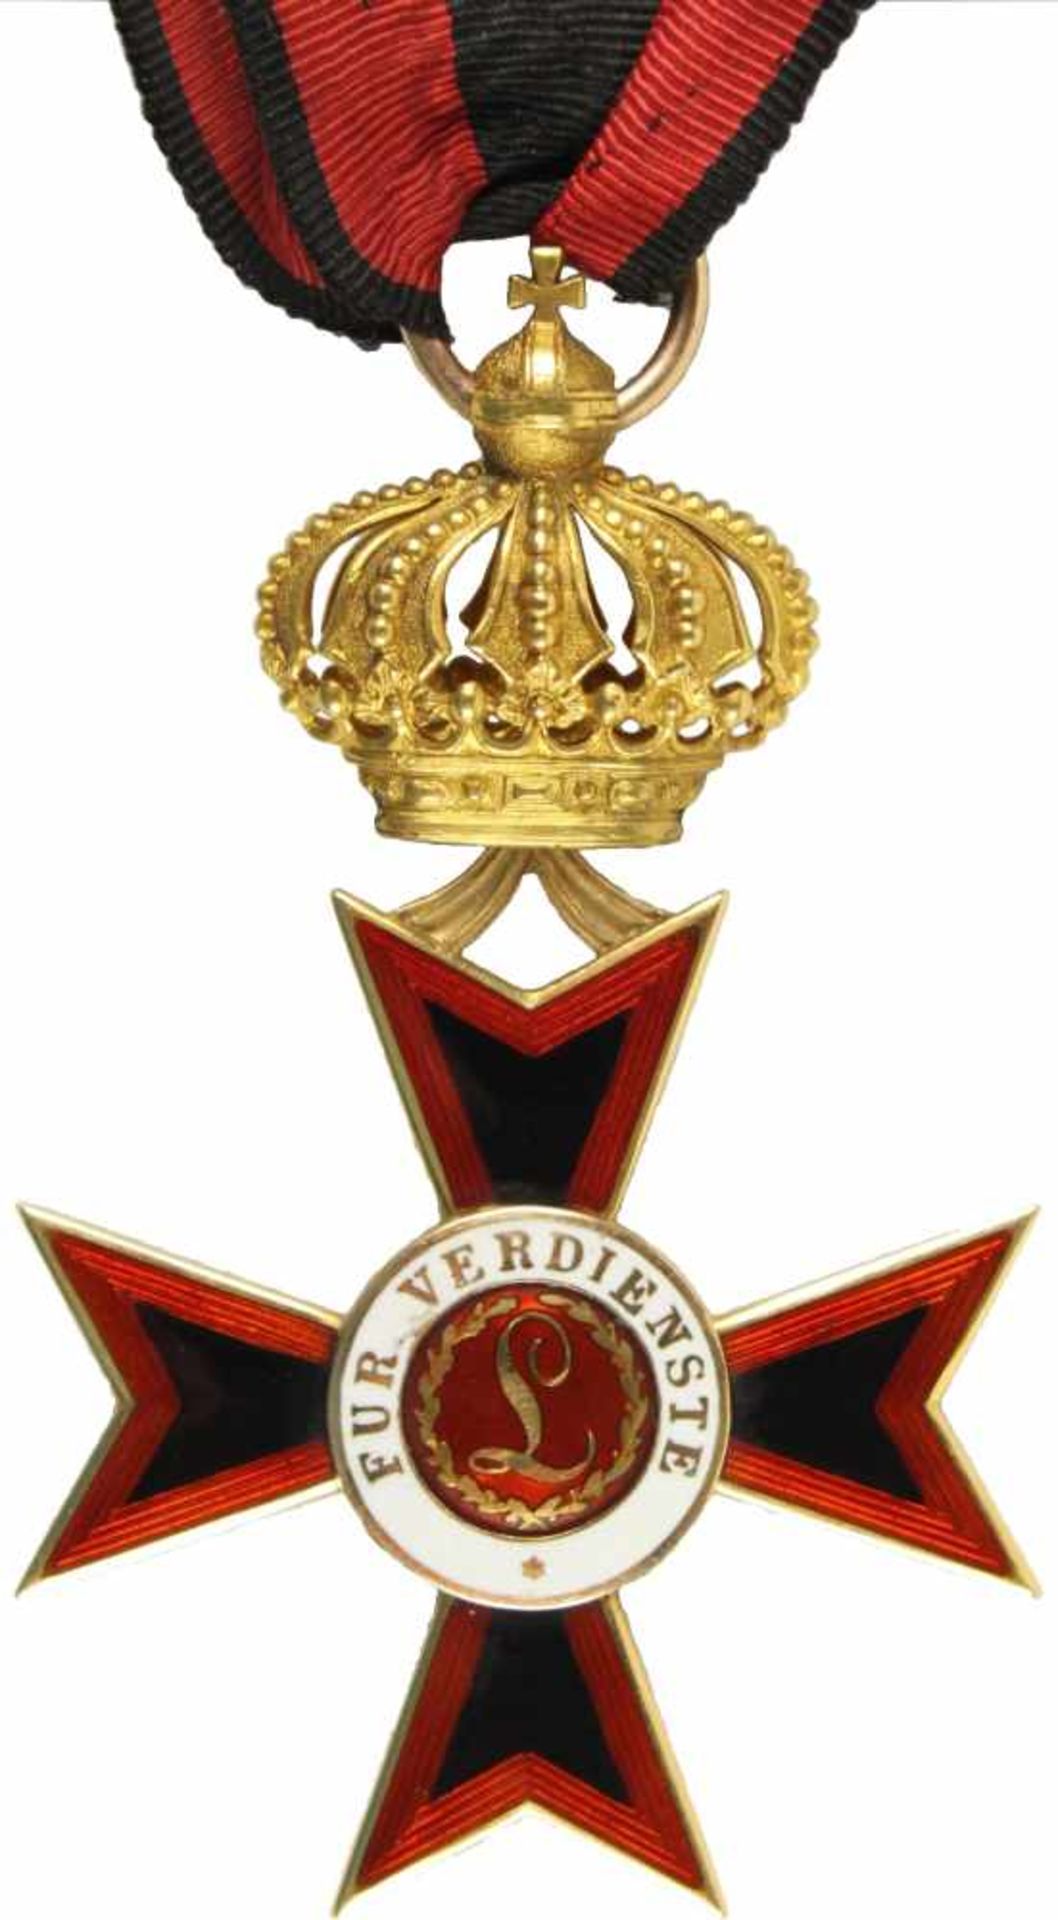 Ludewigsorden, Ritterkreuz 1. Klasse, verliehen 1831-1912. Kreuz Gold emailliert, das rote Emaille